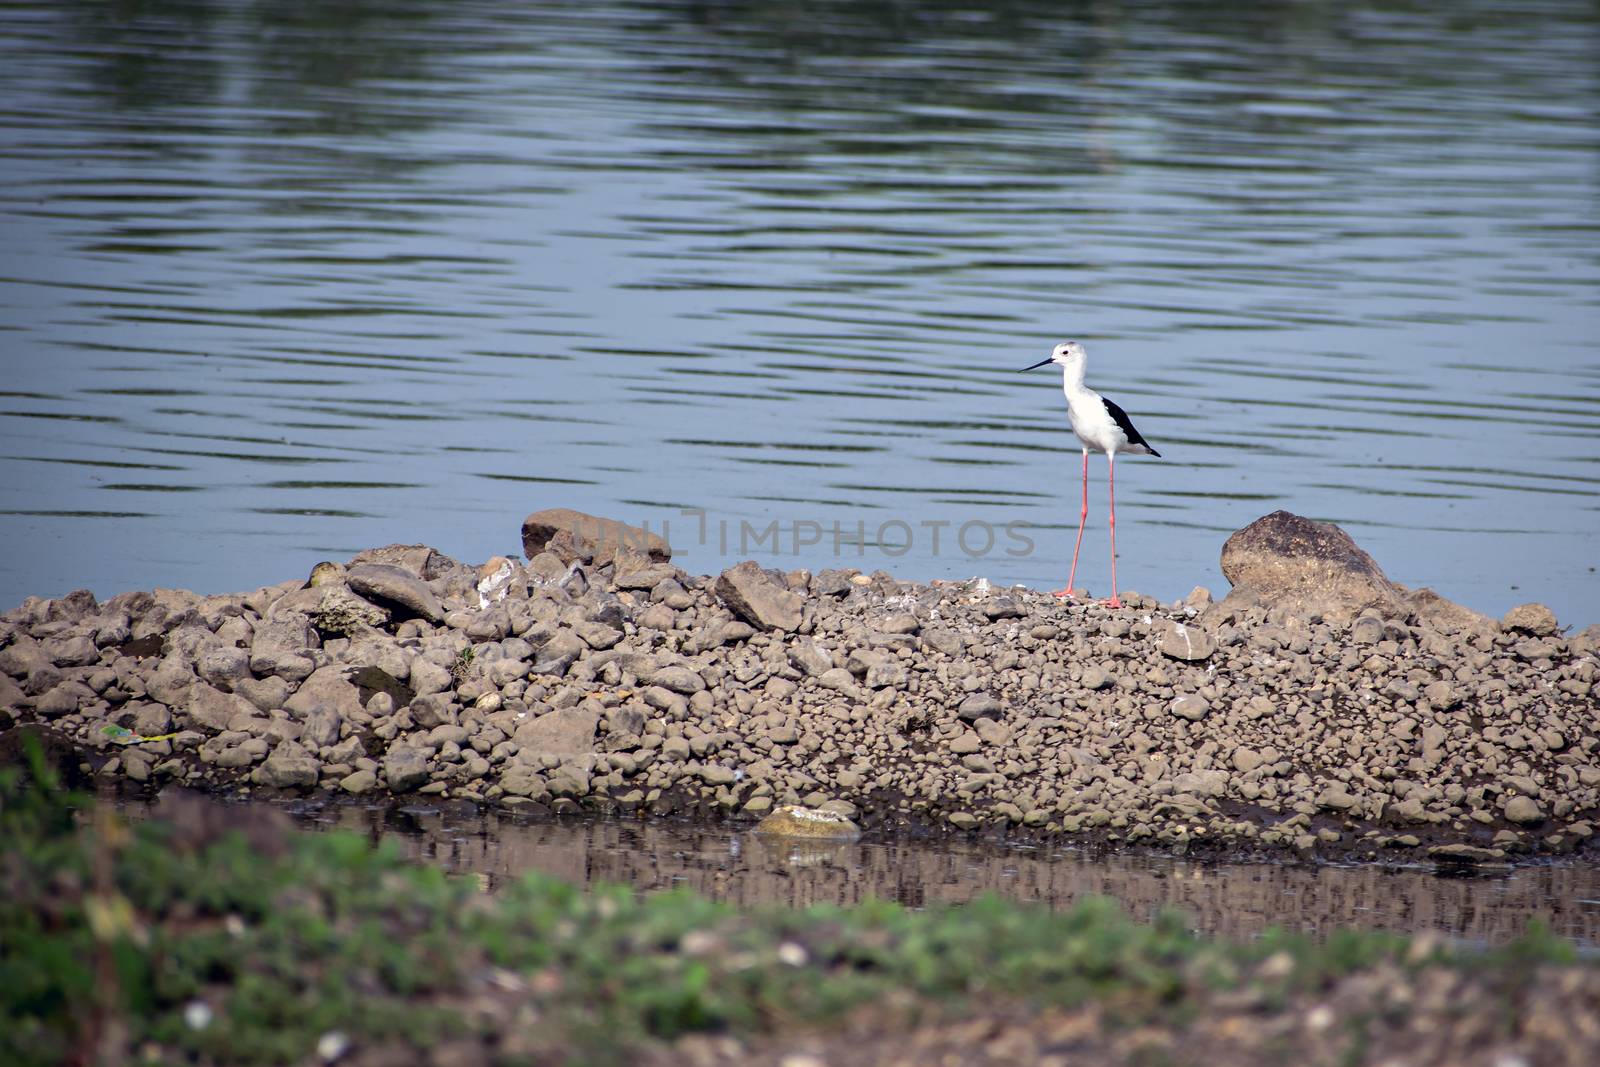 A Black-winged Stilt searching food on river bank., Daund, Maharashtra, India